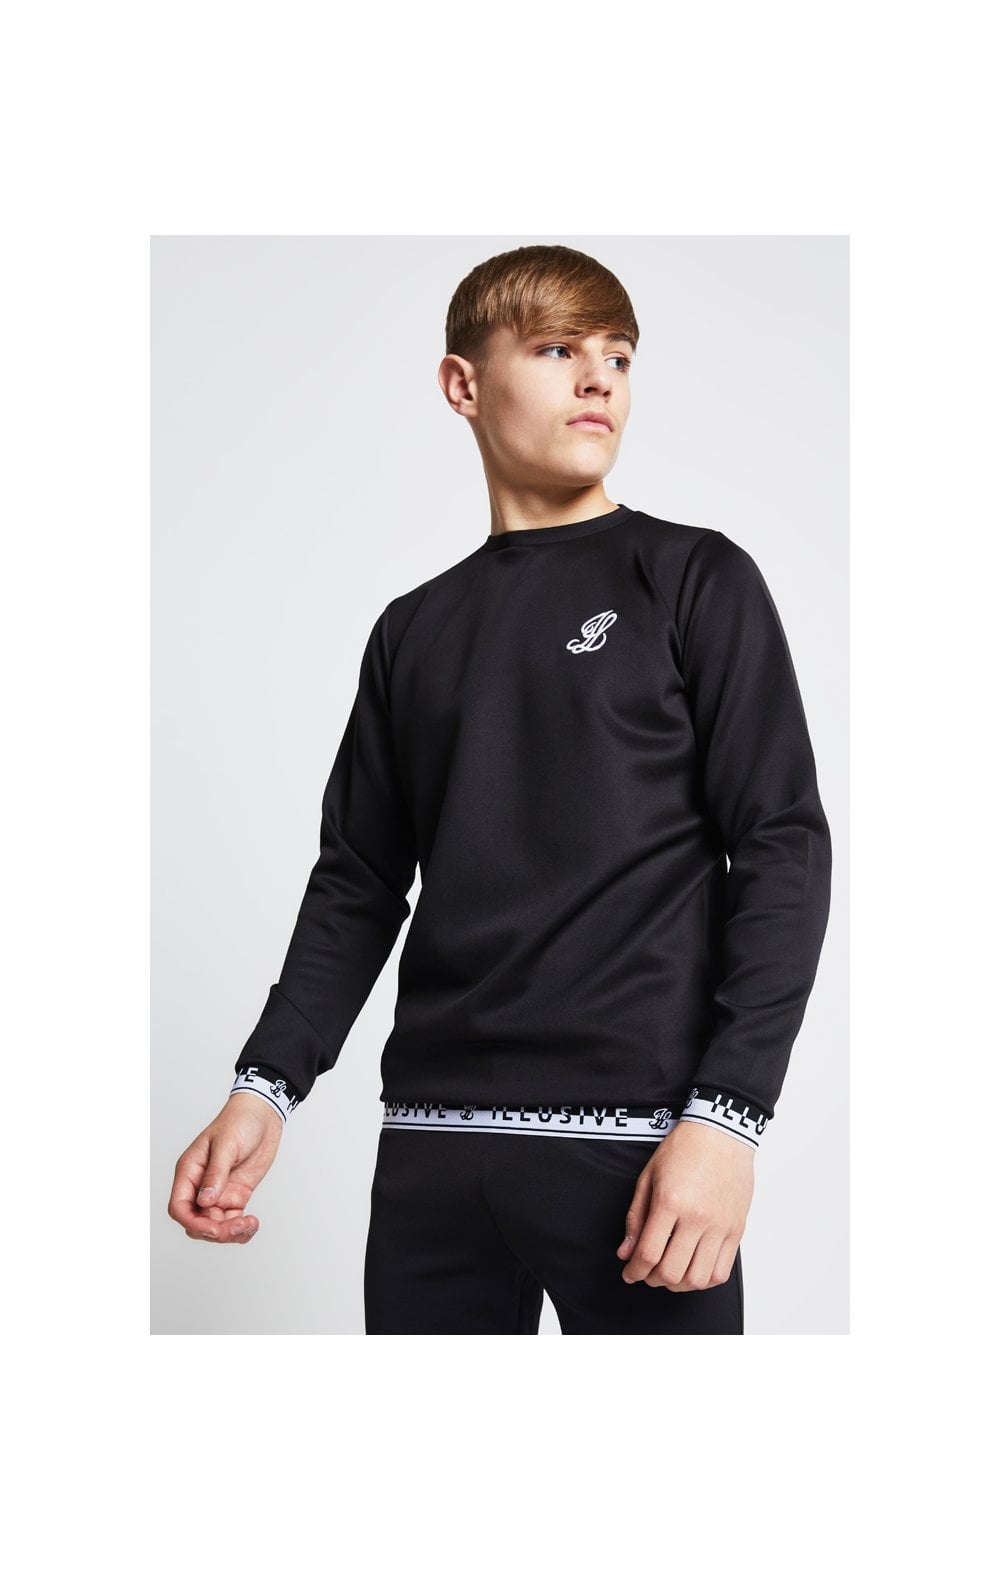 Illusive London Taped Crew Sweater - Black (1)